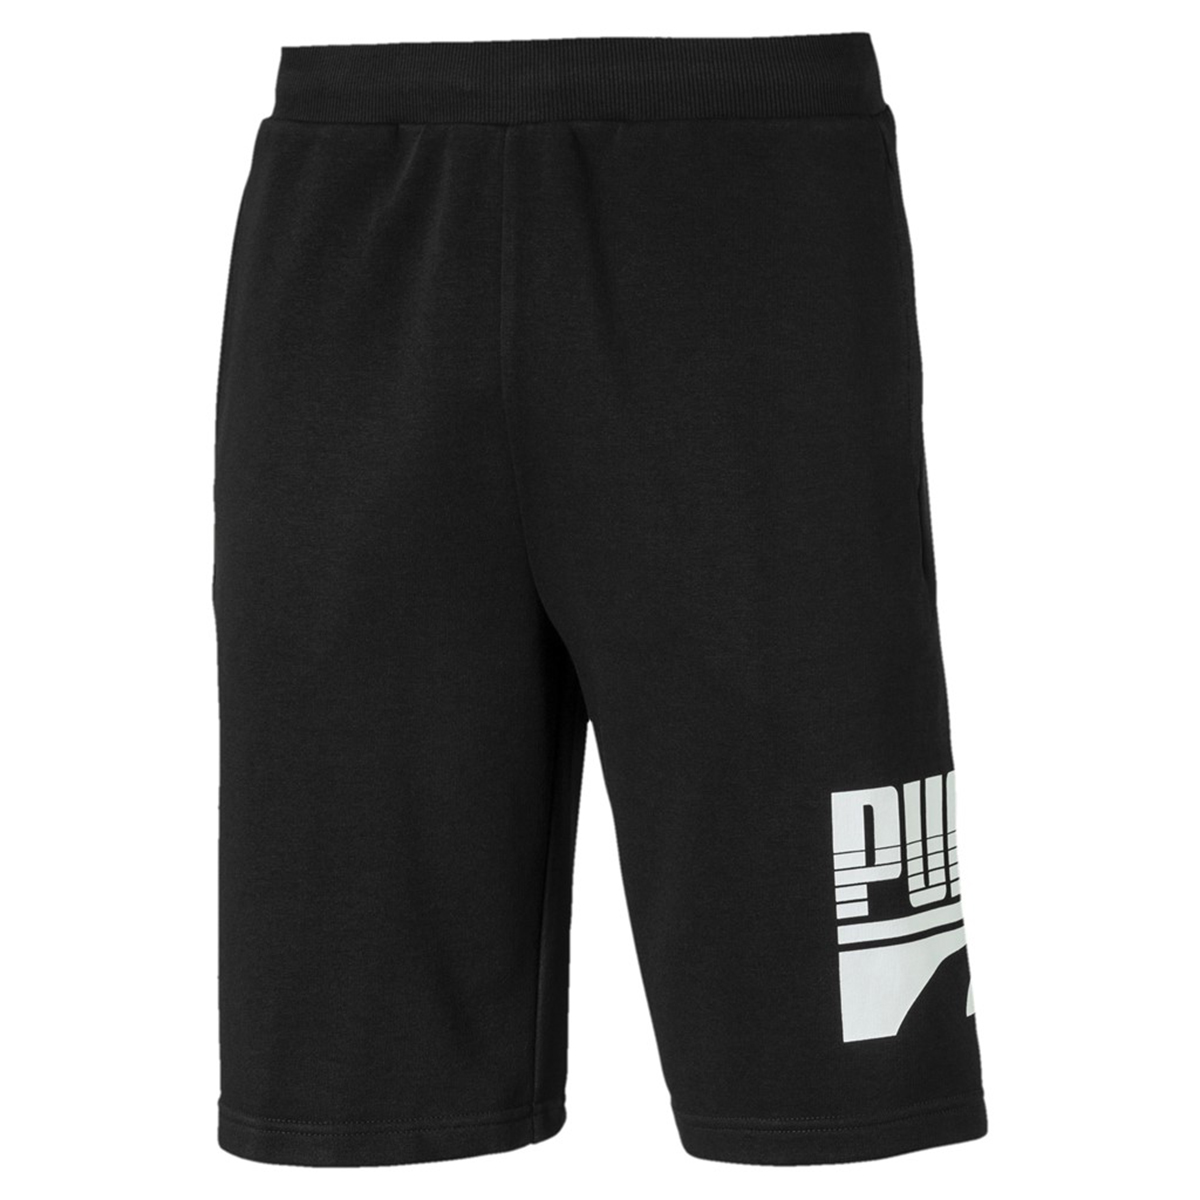 PUMA Herren Rebel Shorts 9" Hose Pants Sporthose Shorts schwarz 580550 